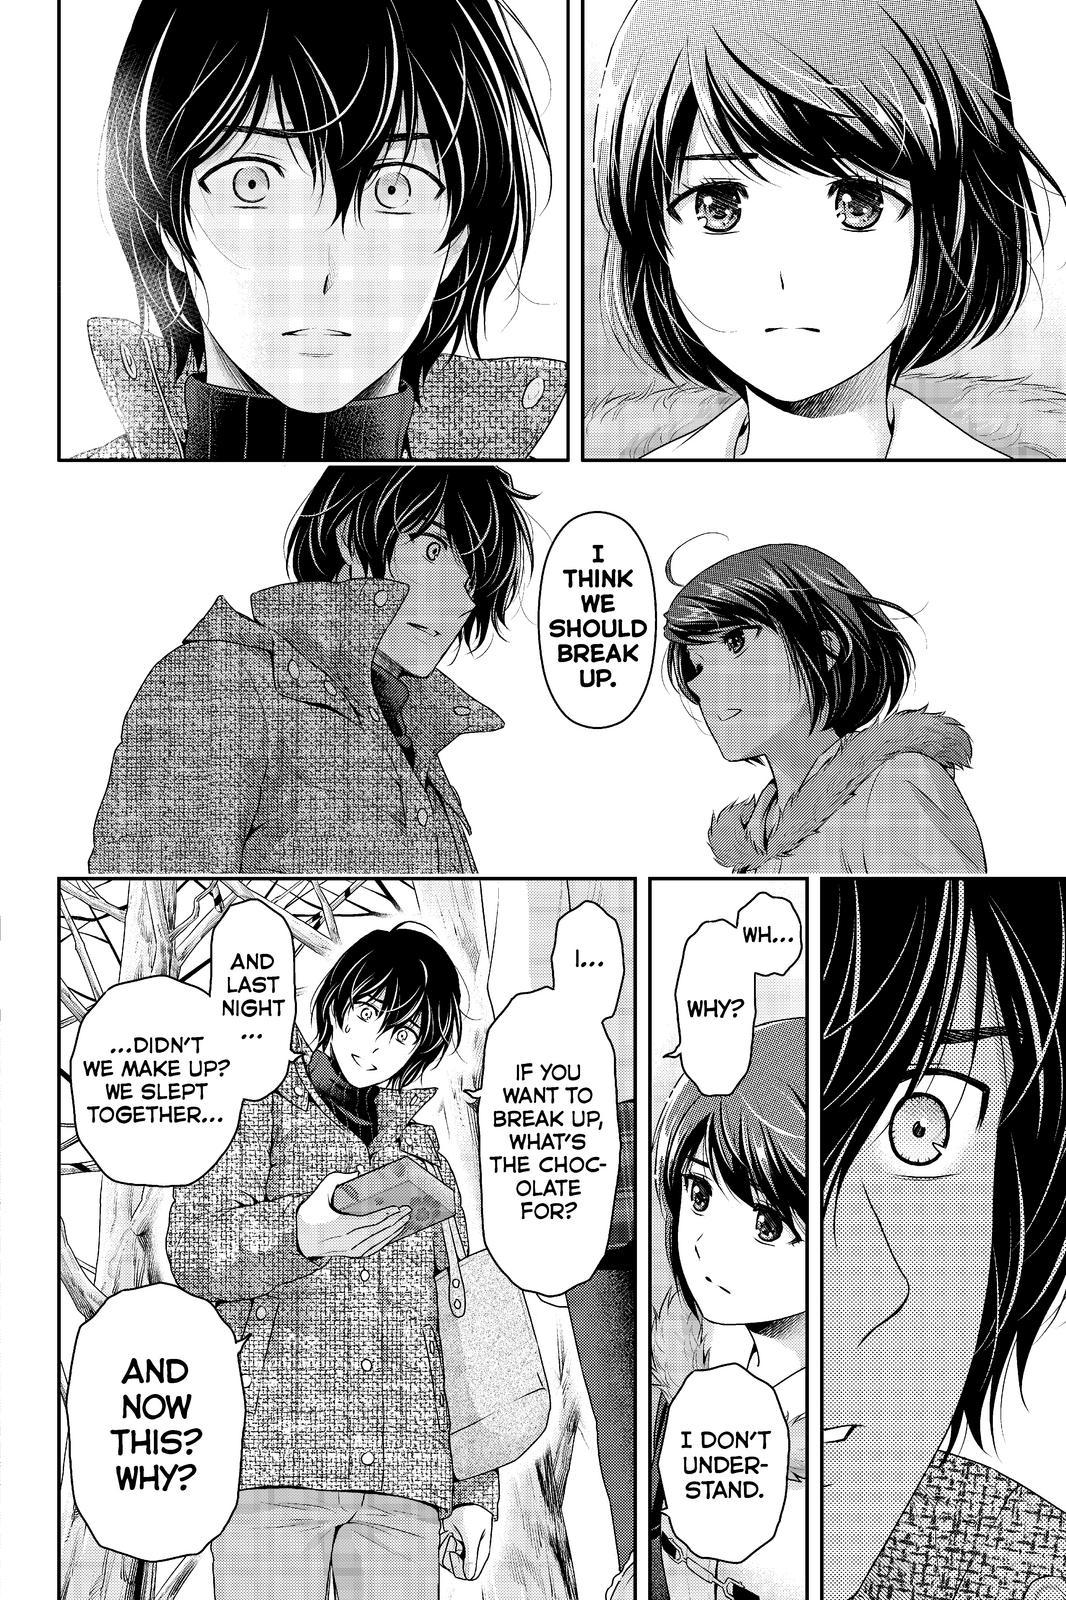 Domestic Girlfriend, Chapter 256 - Domestic Girlfriend Manga Online